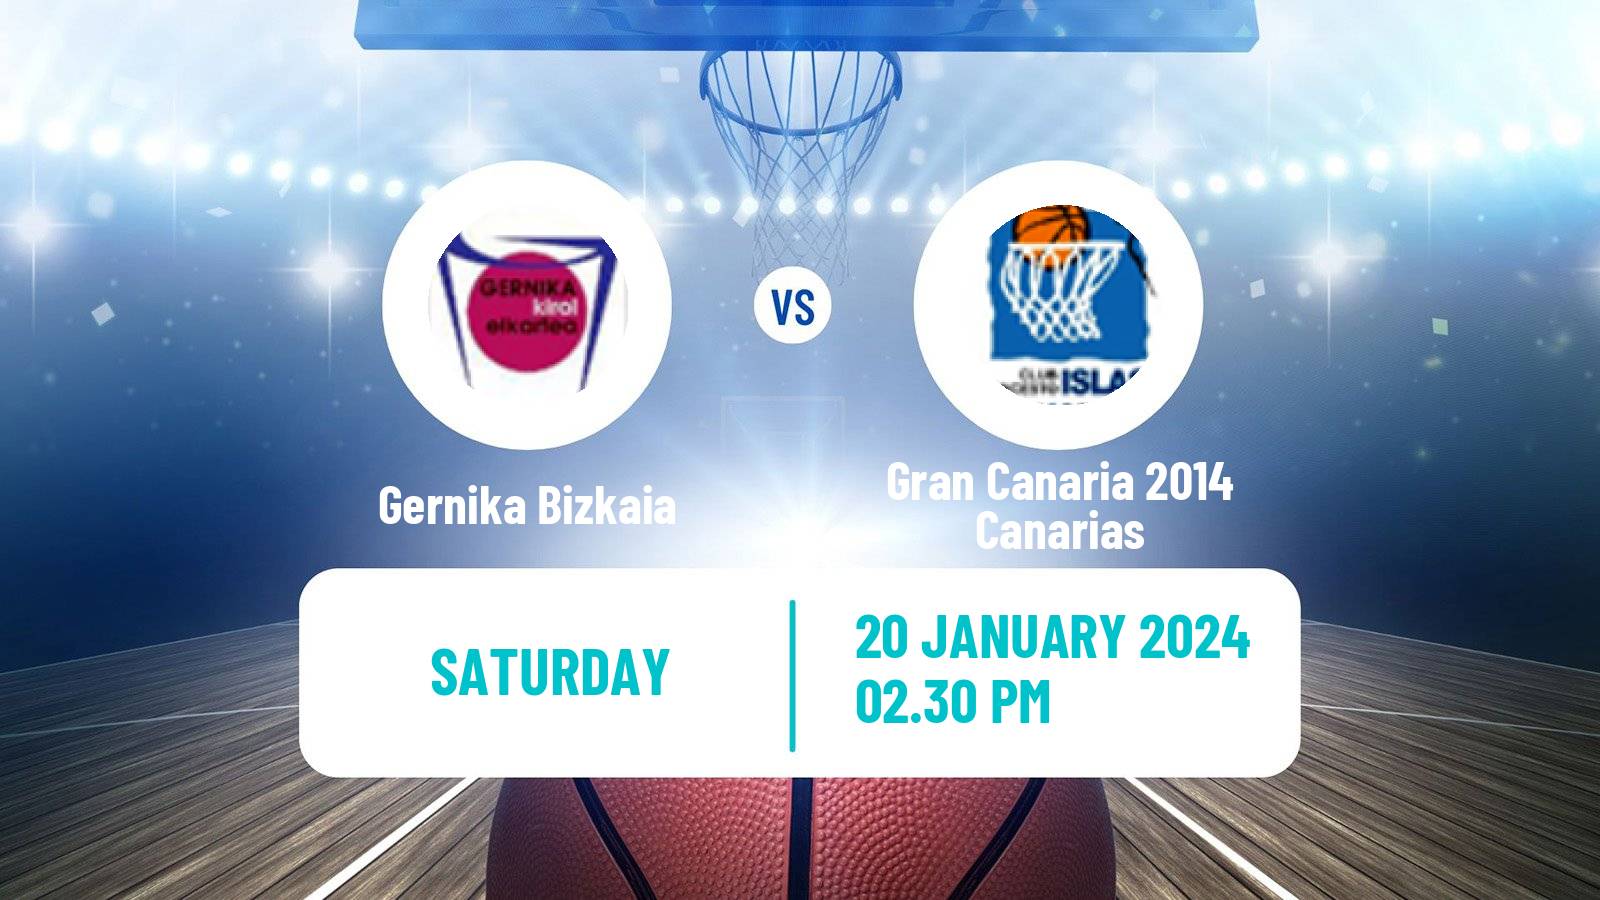 Basketball Spanish Liga Femenina Basketball Gernika Bizkaia - Gran Canaria 2014 Canarias